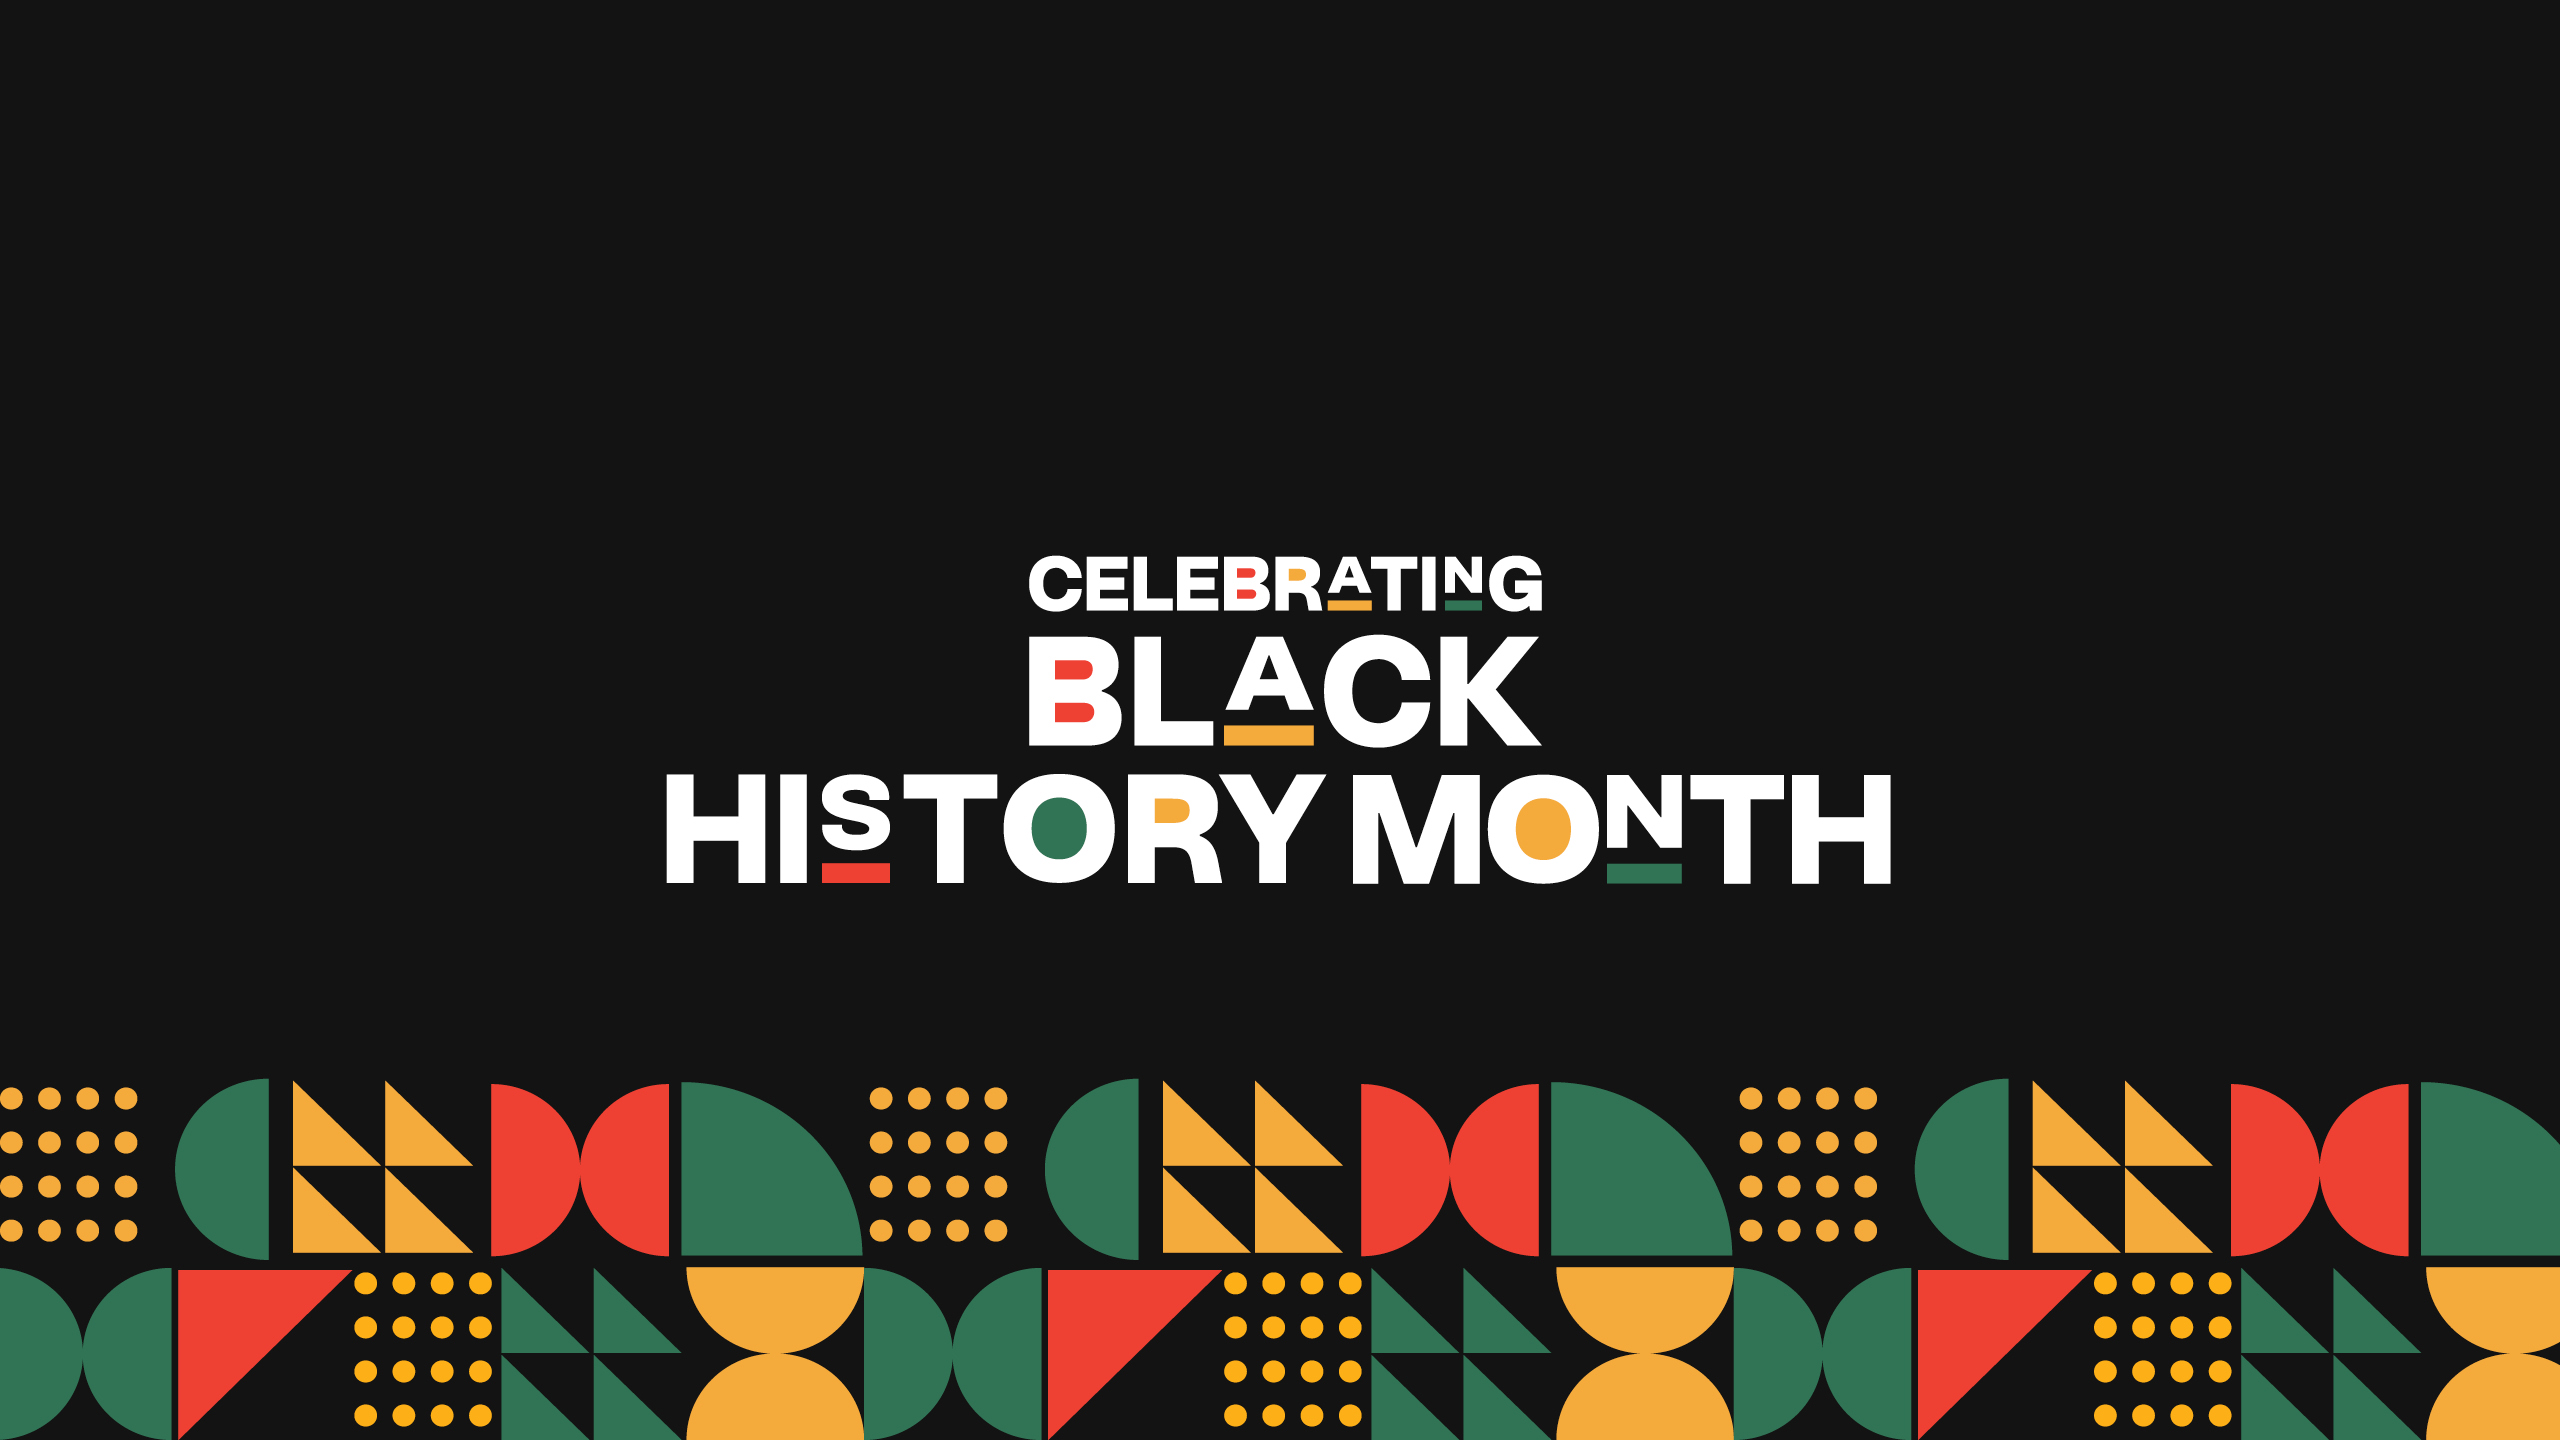 Black History Month Graphics Social Media Hhs Gov